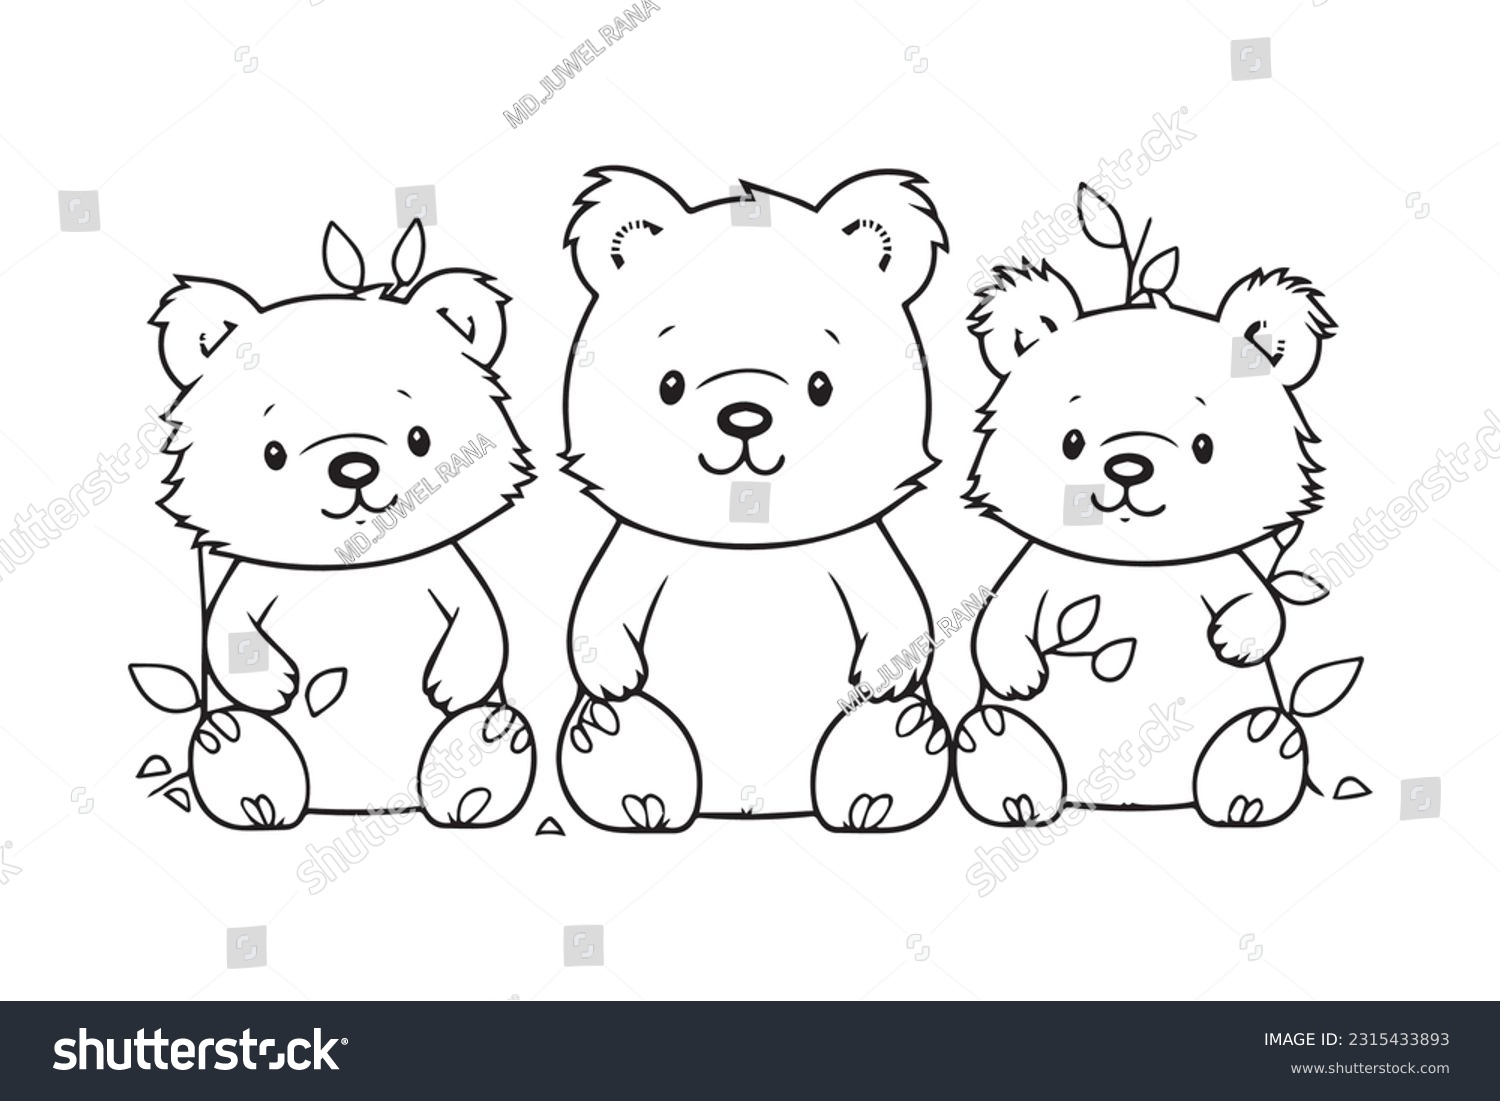 Bear coloring page royalty